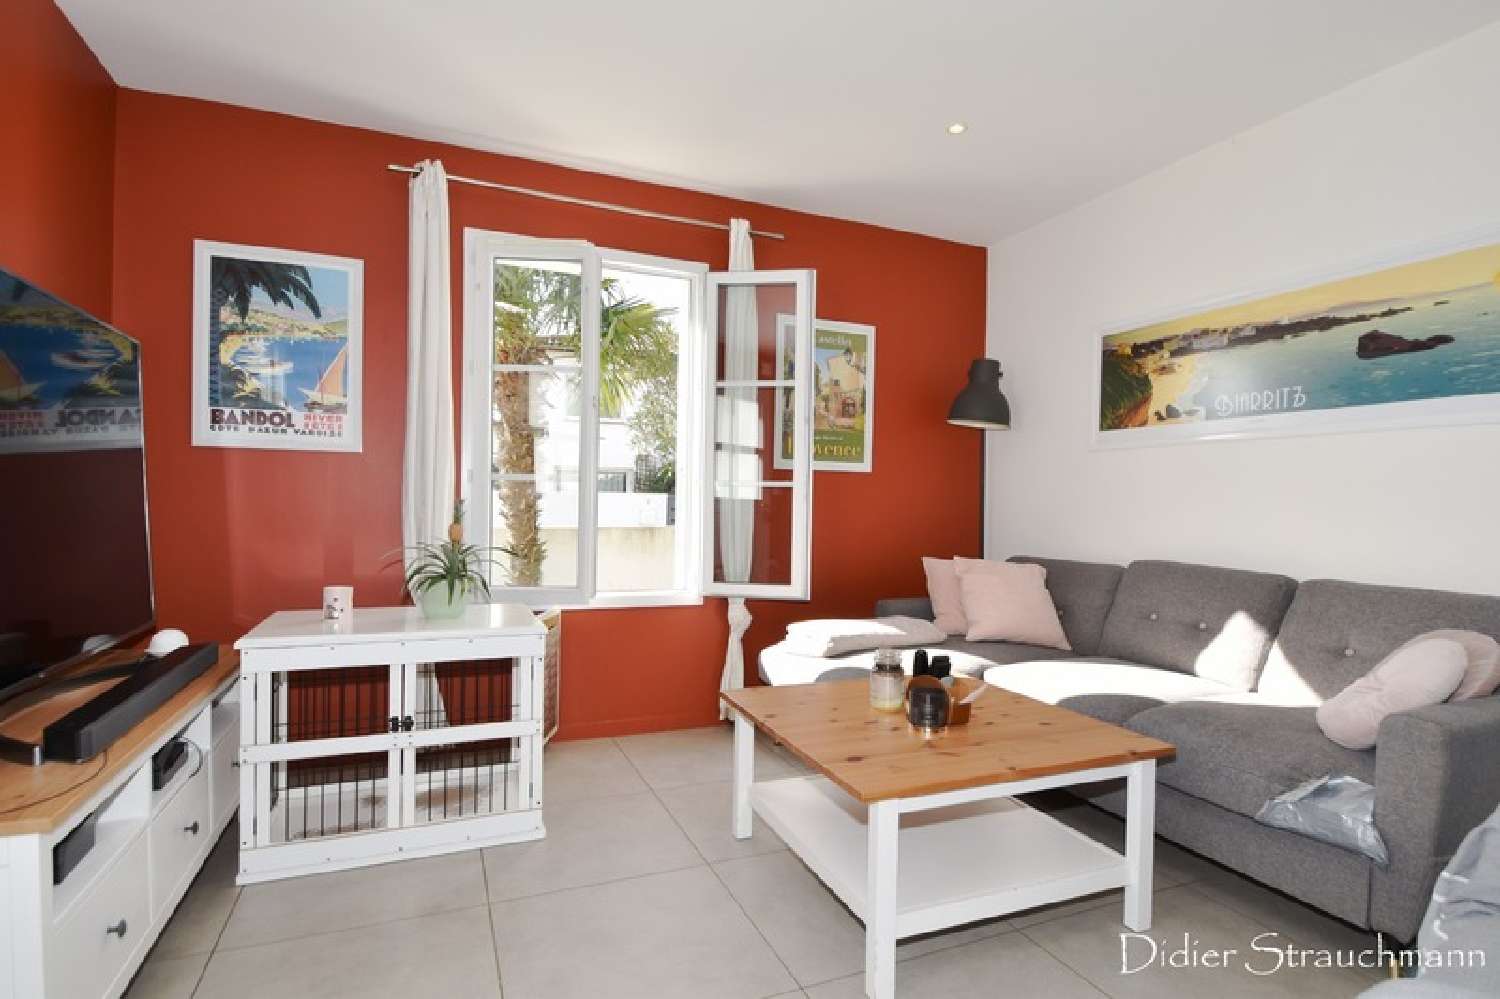  à vendre maison Périgny Charente-Maritime 5